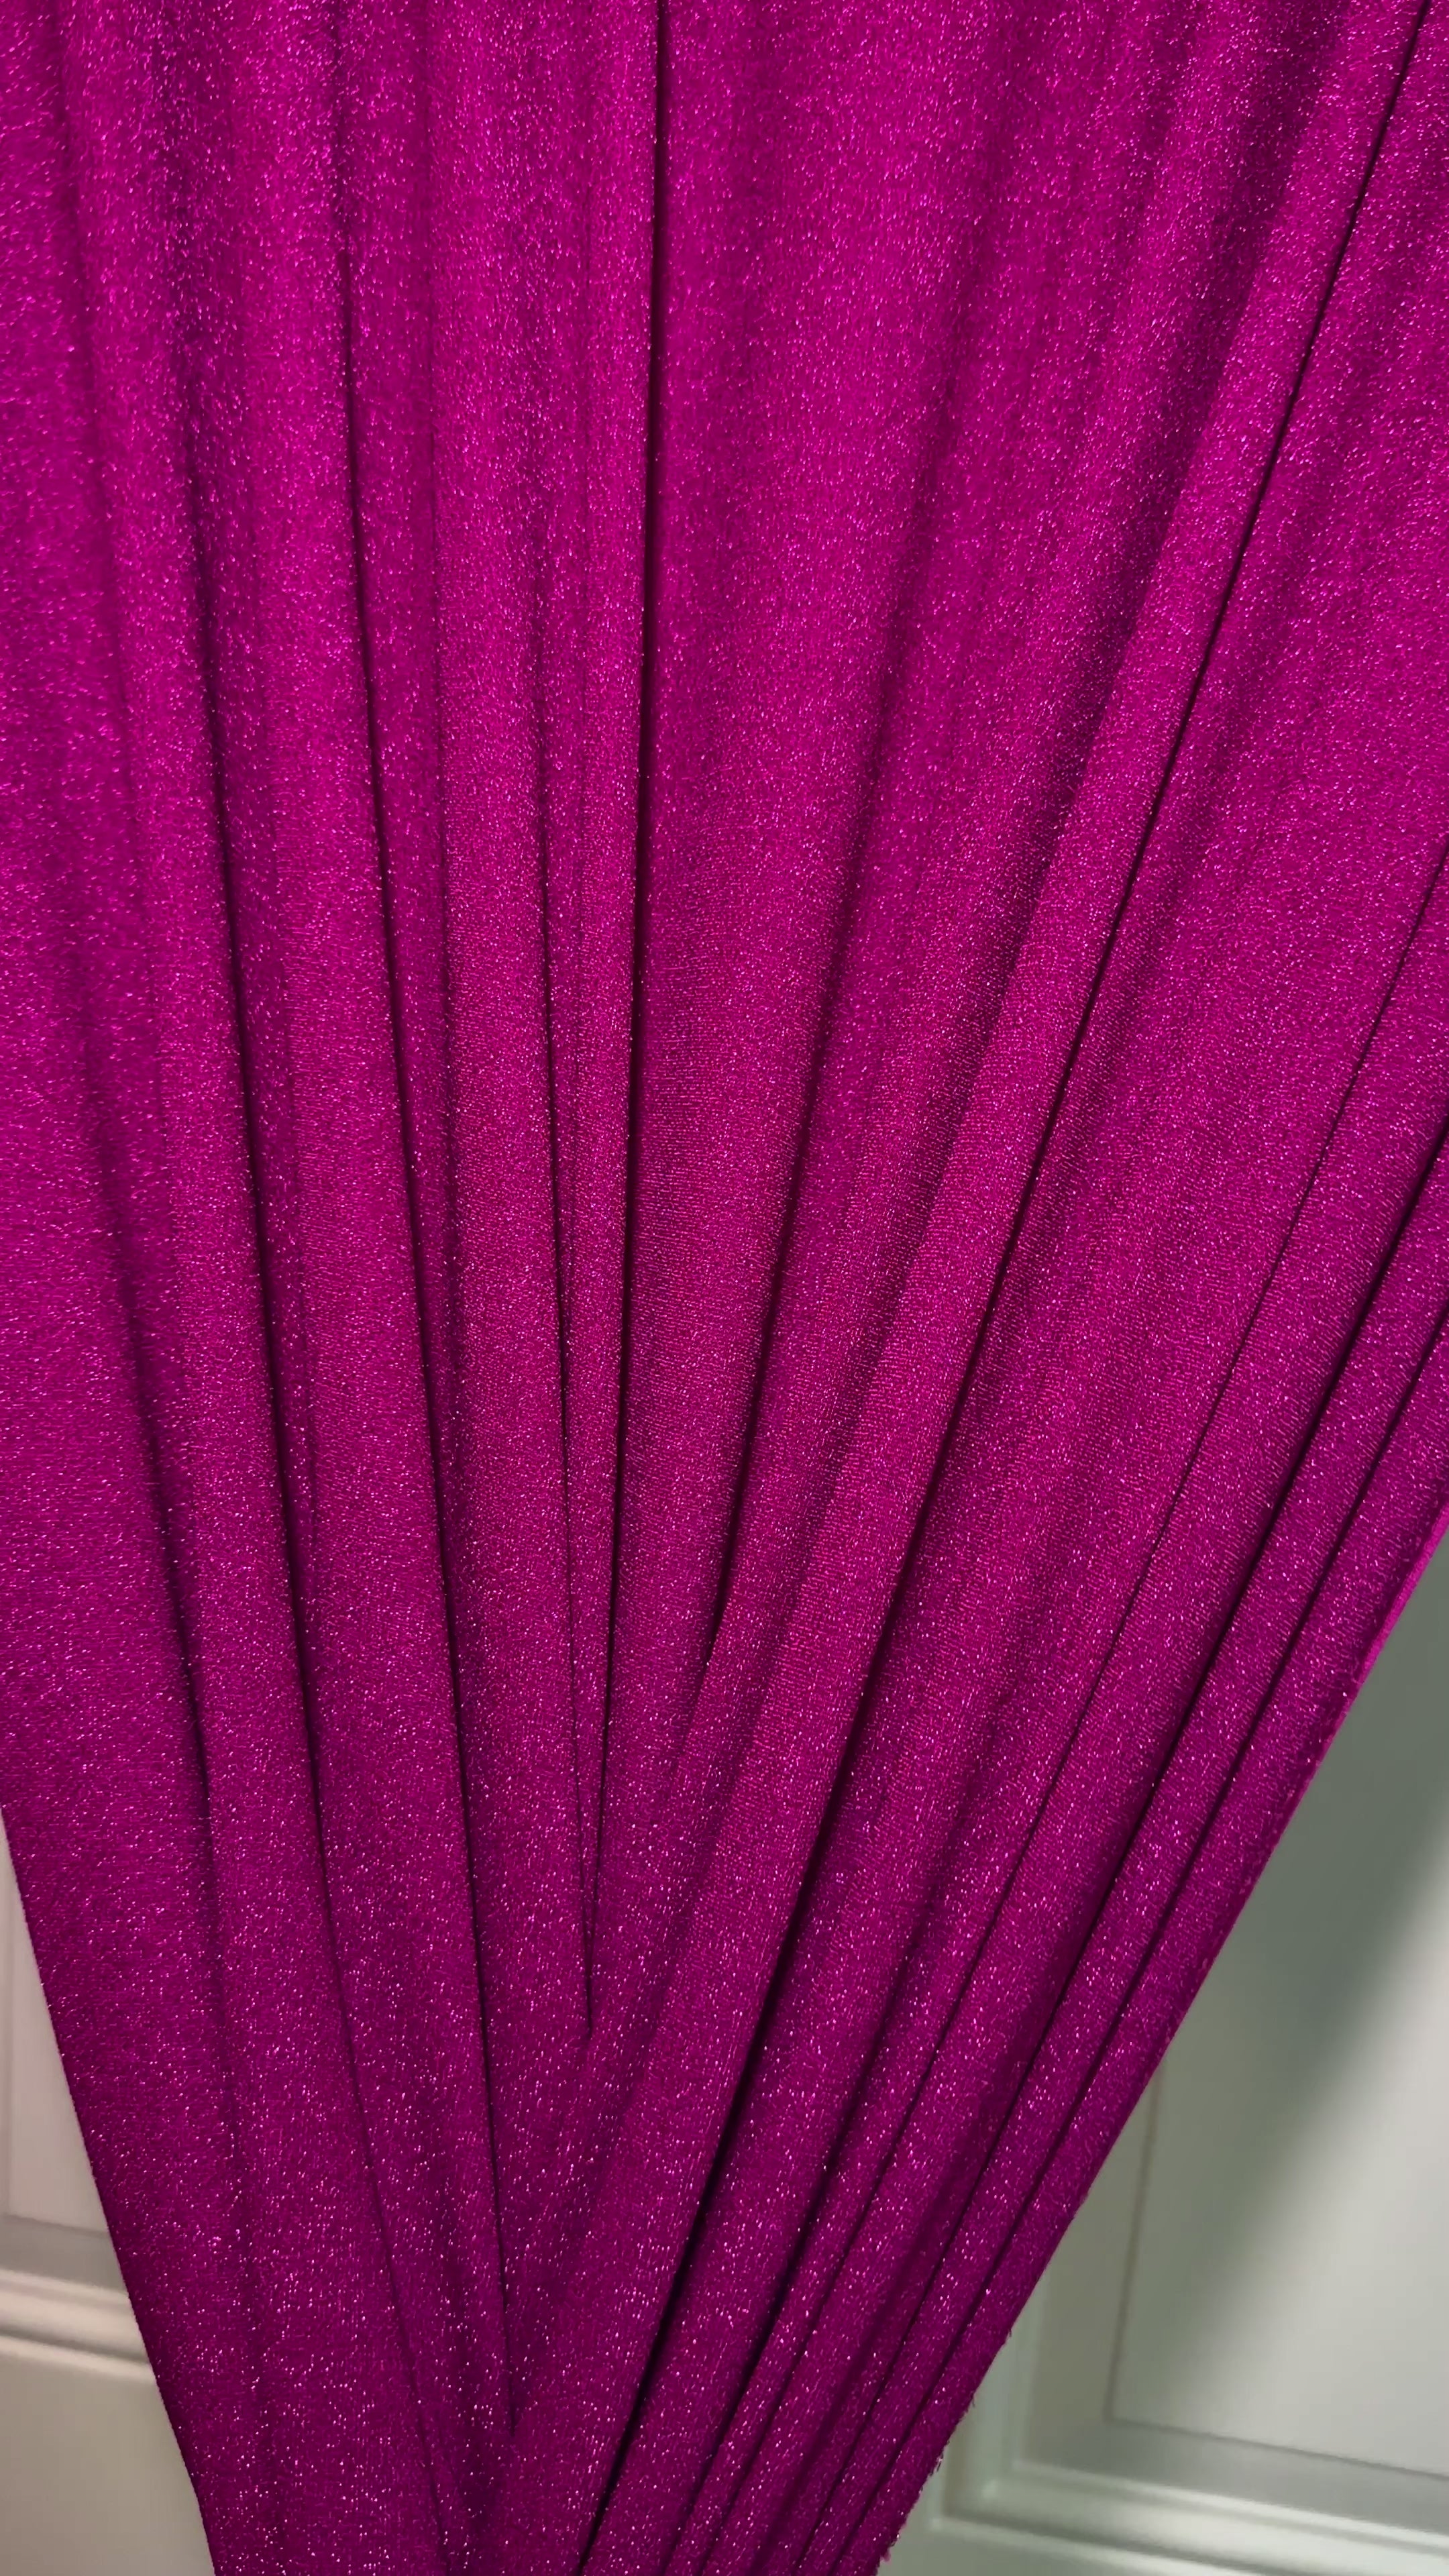 Romex Textiles Polyester Spandex Shiny Lurex Knit Fabric (3 Yards